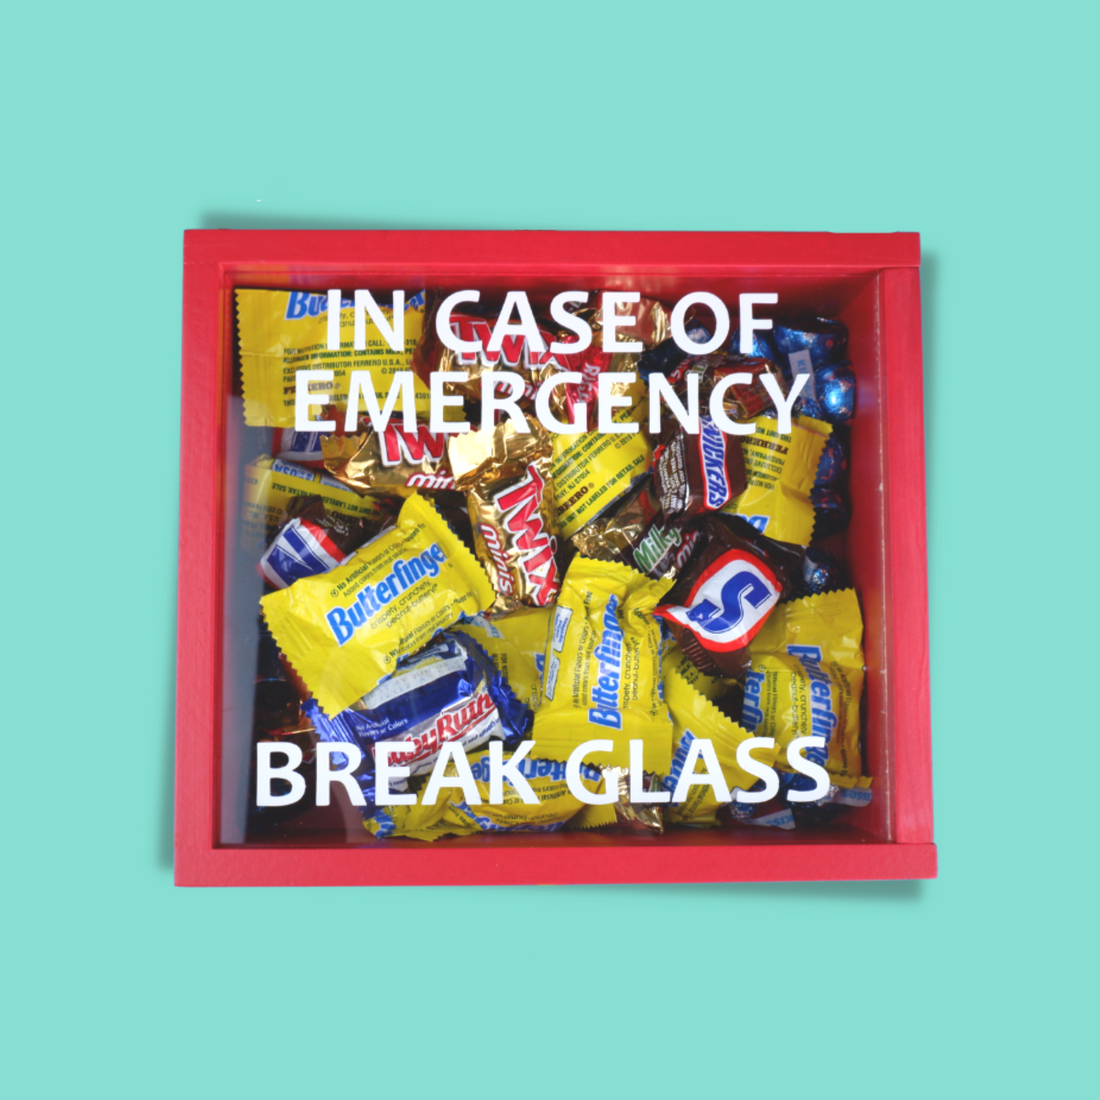 Chocolate Emergency Gift Box